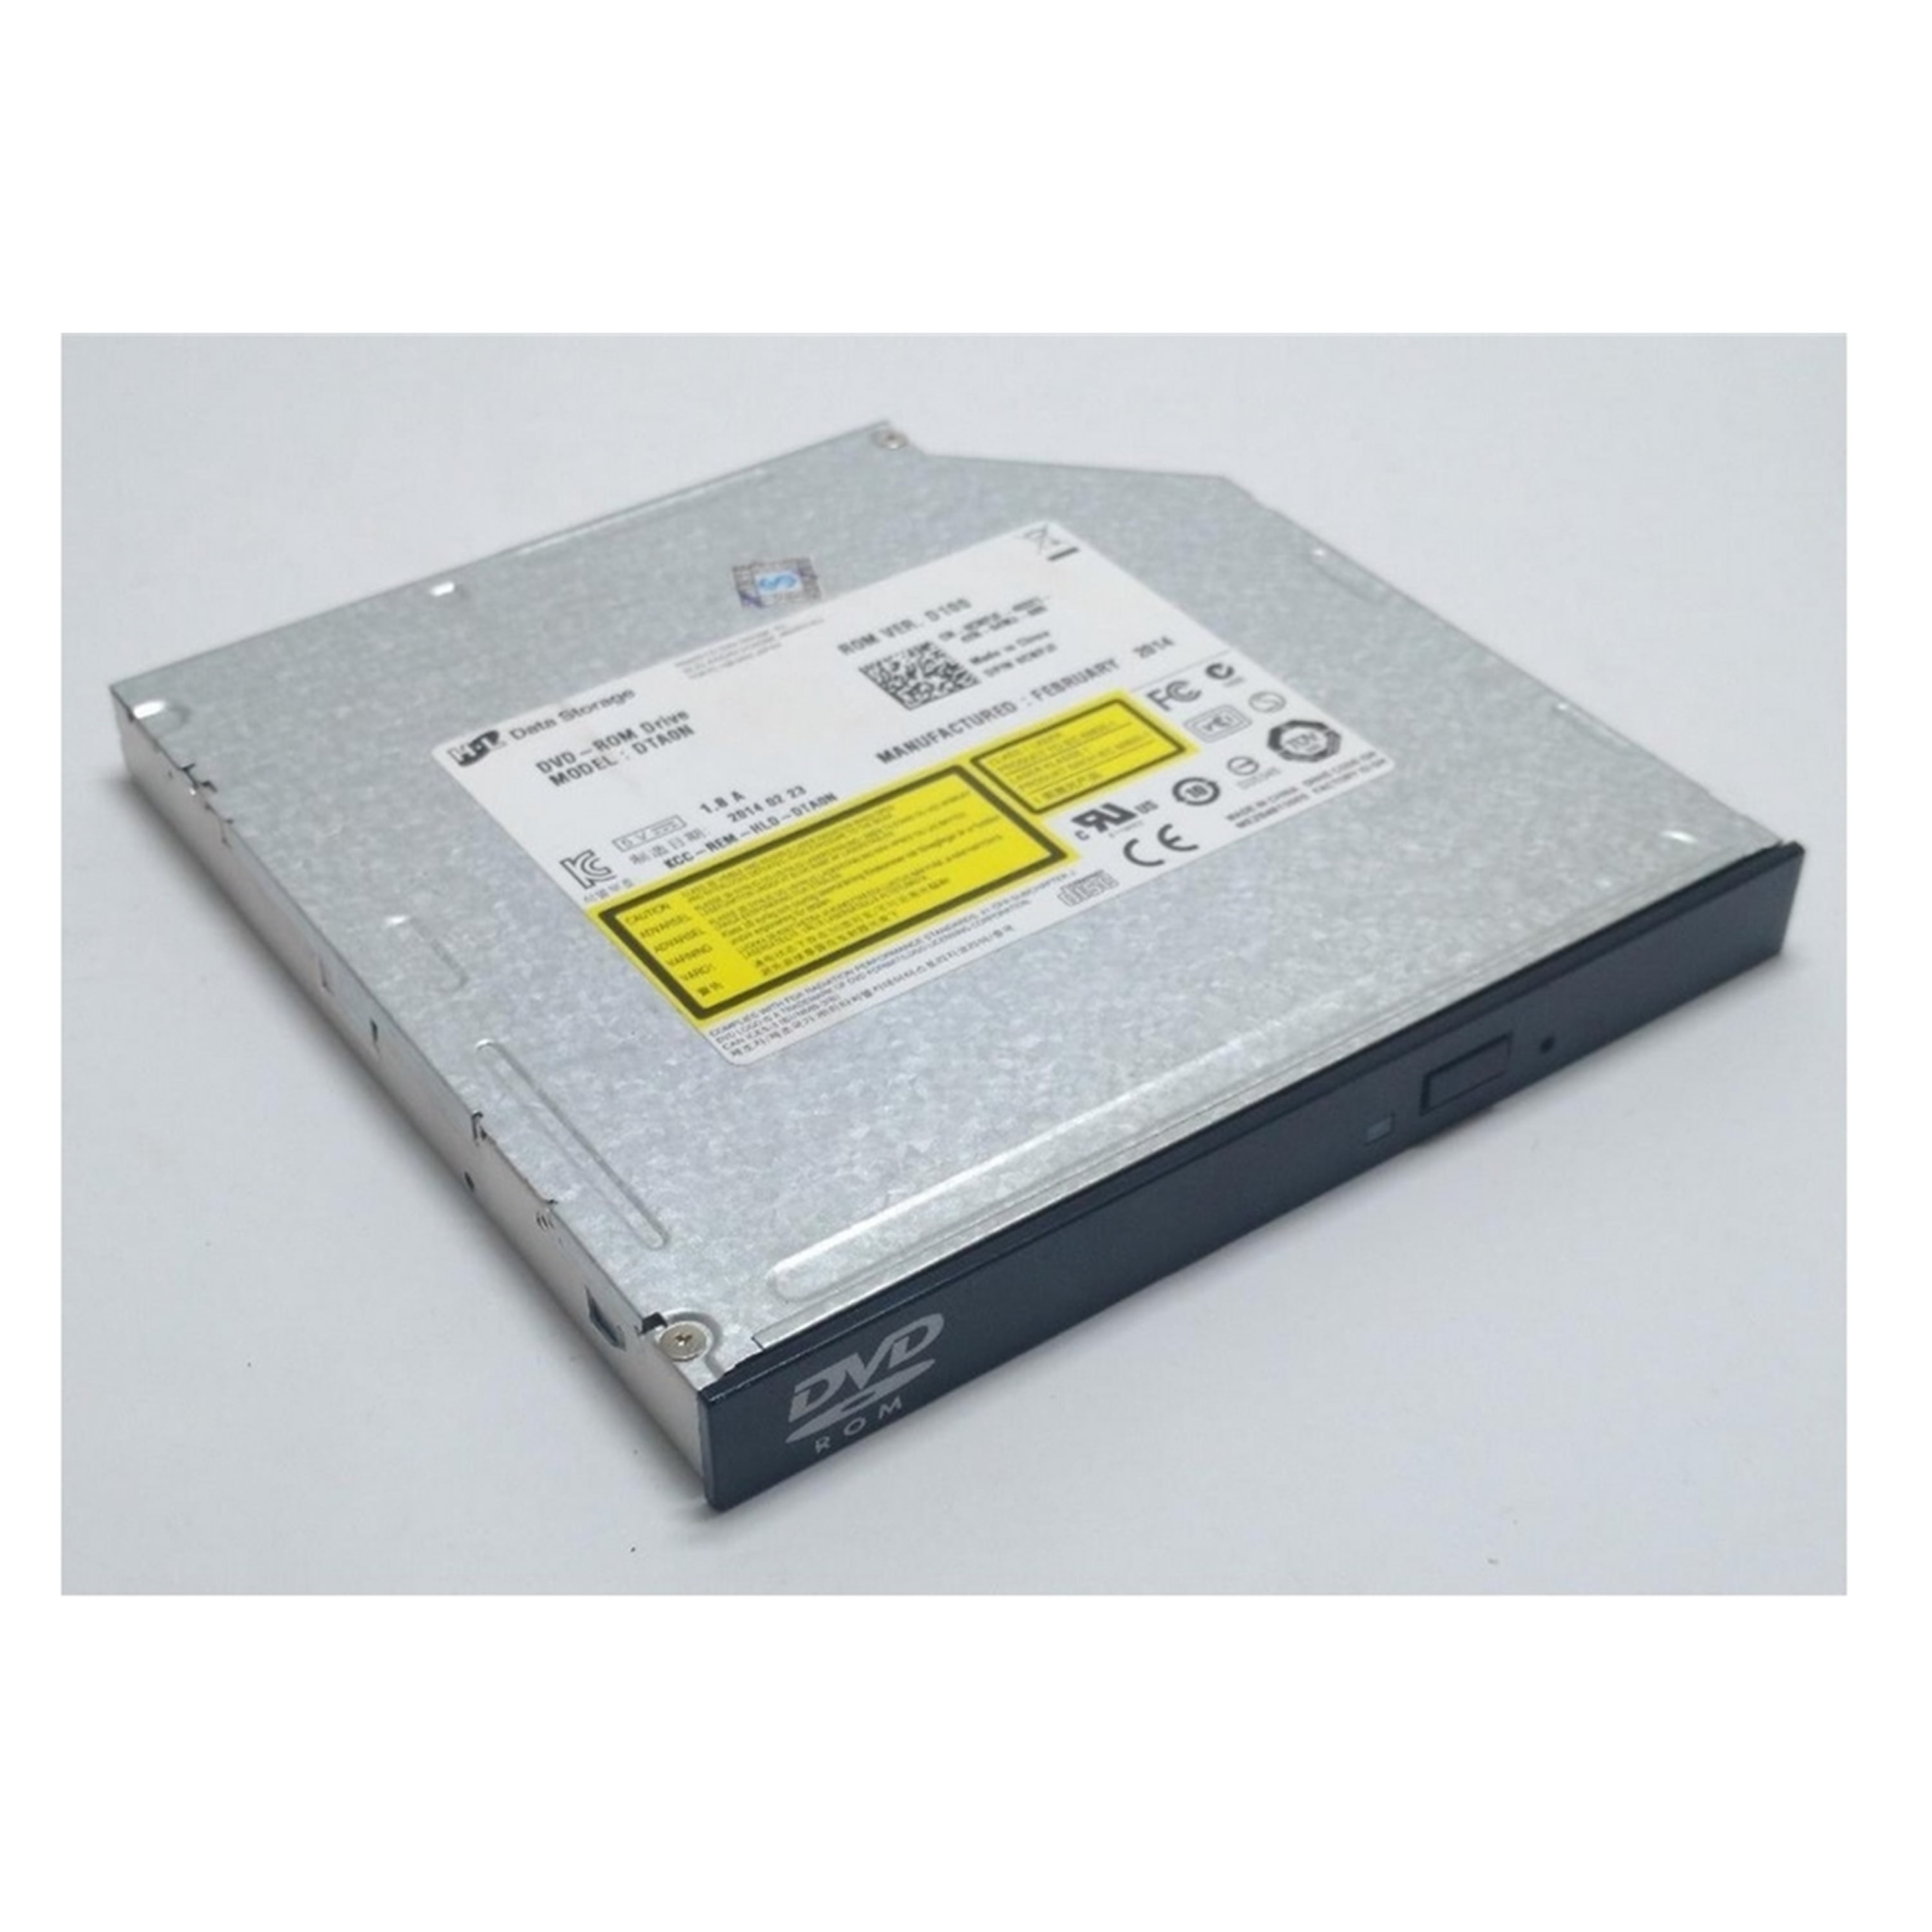 IBM Thinkpad USB CD-RW External Drive ONLY 22P9068 CD-W28PU 22P9061 